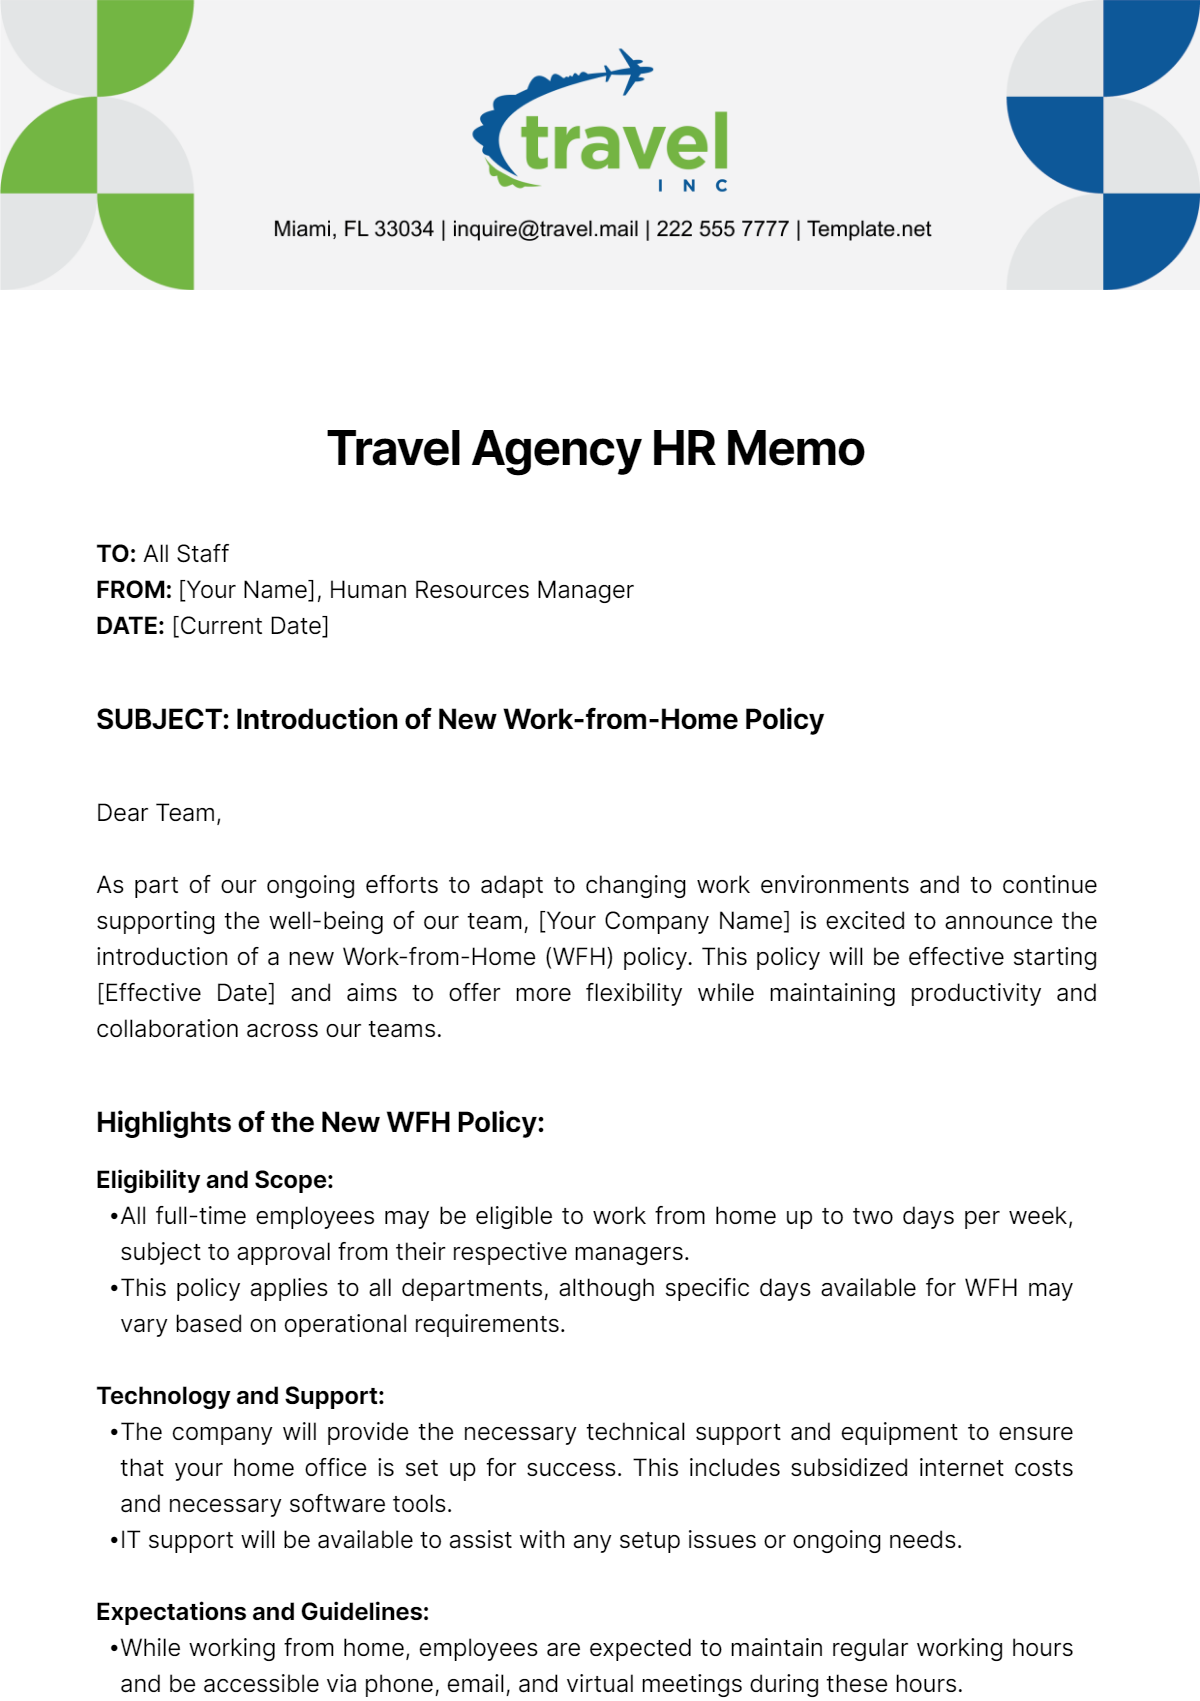 Travel Agency HR Memo Template